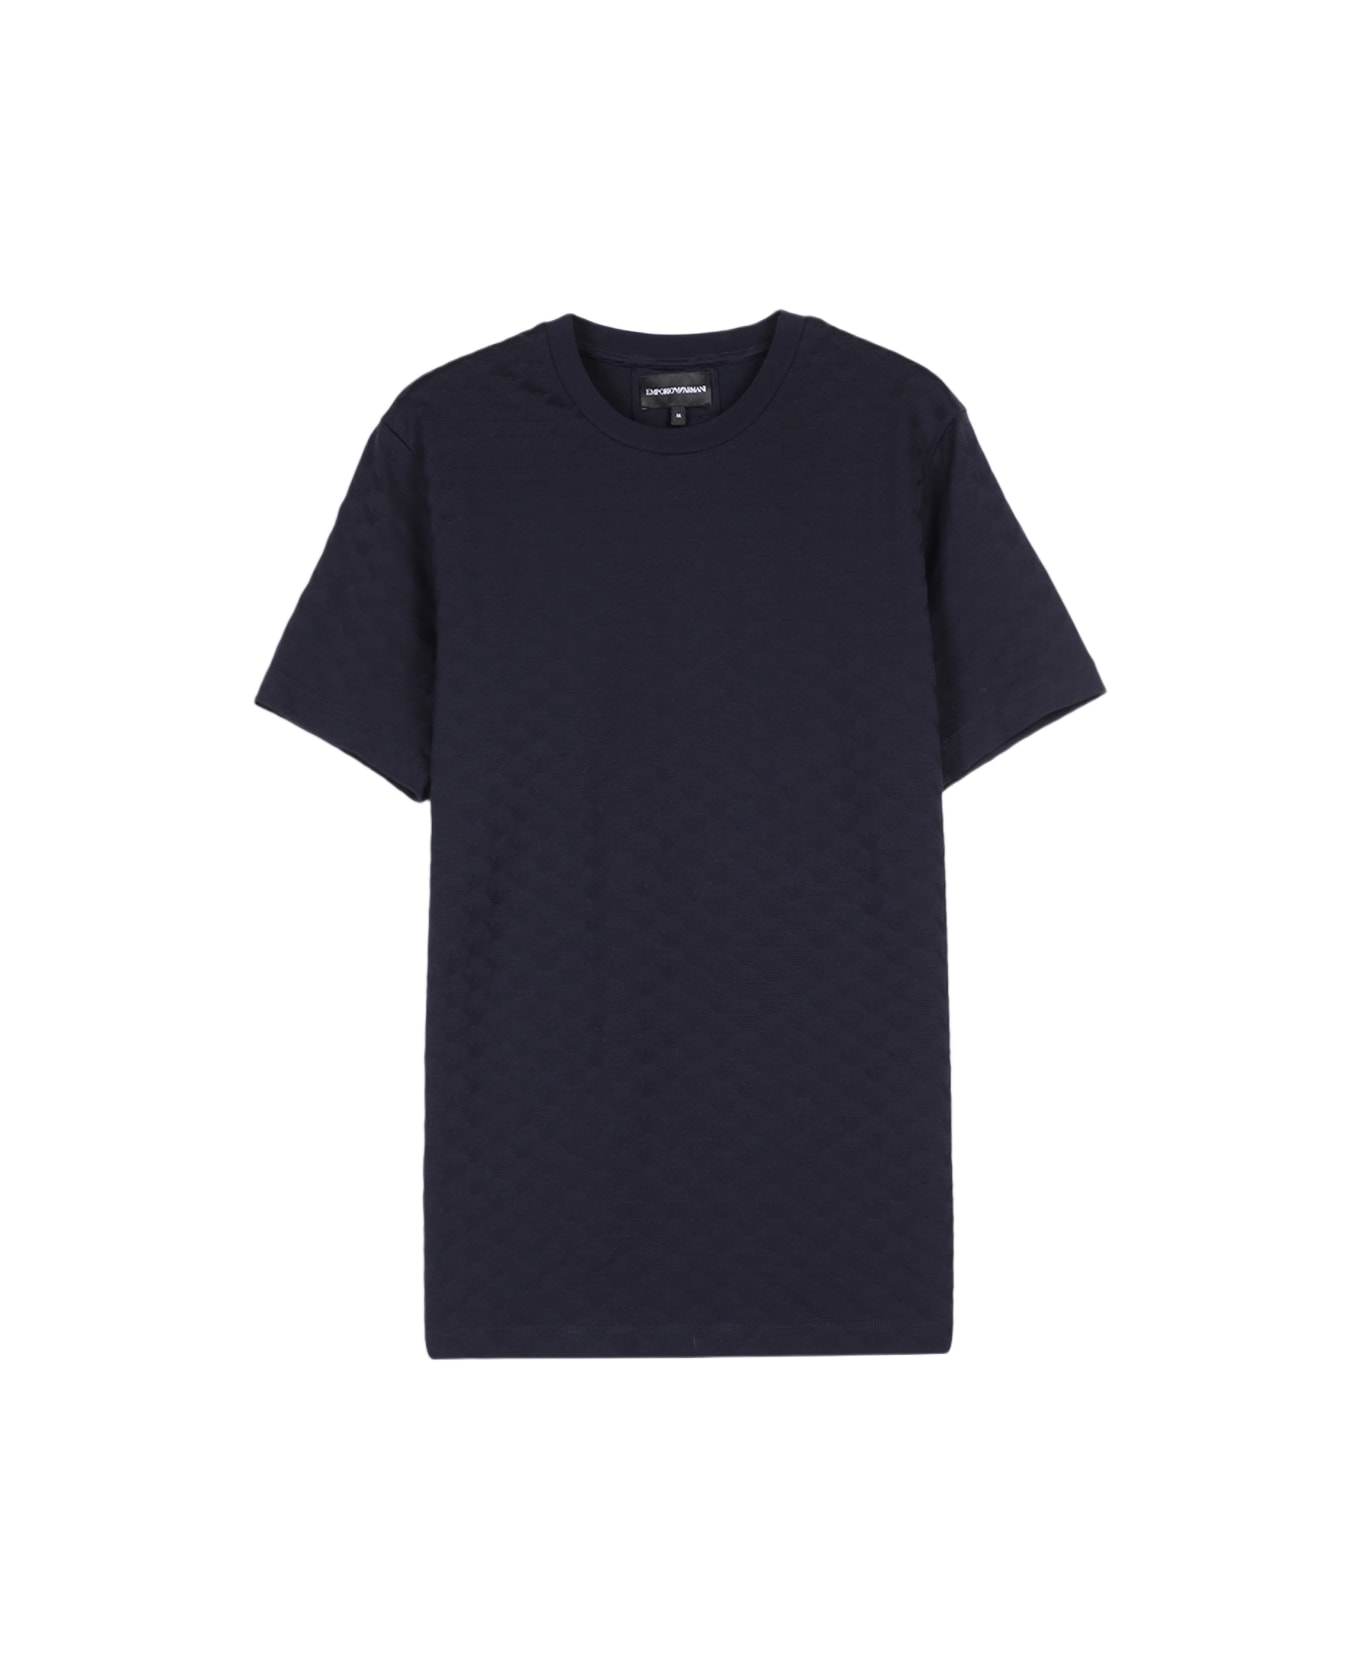 Emporio Armani T-shirt Blue Cotton T-shirt With Jacquard Logo Pattern - Blue シャツ